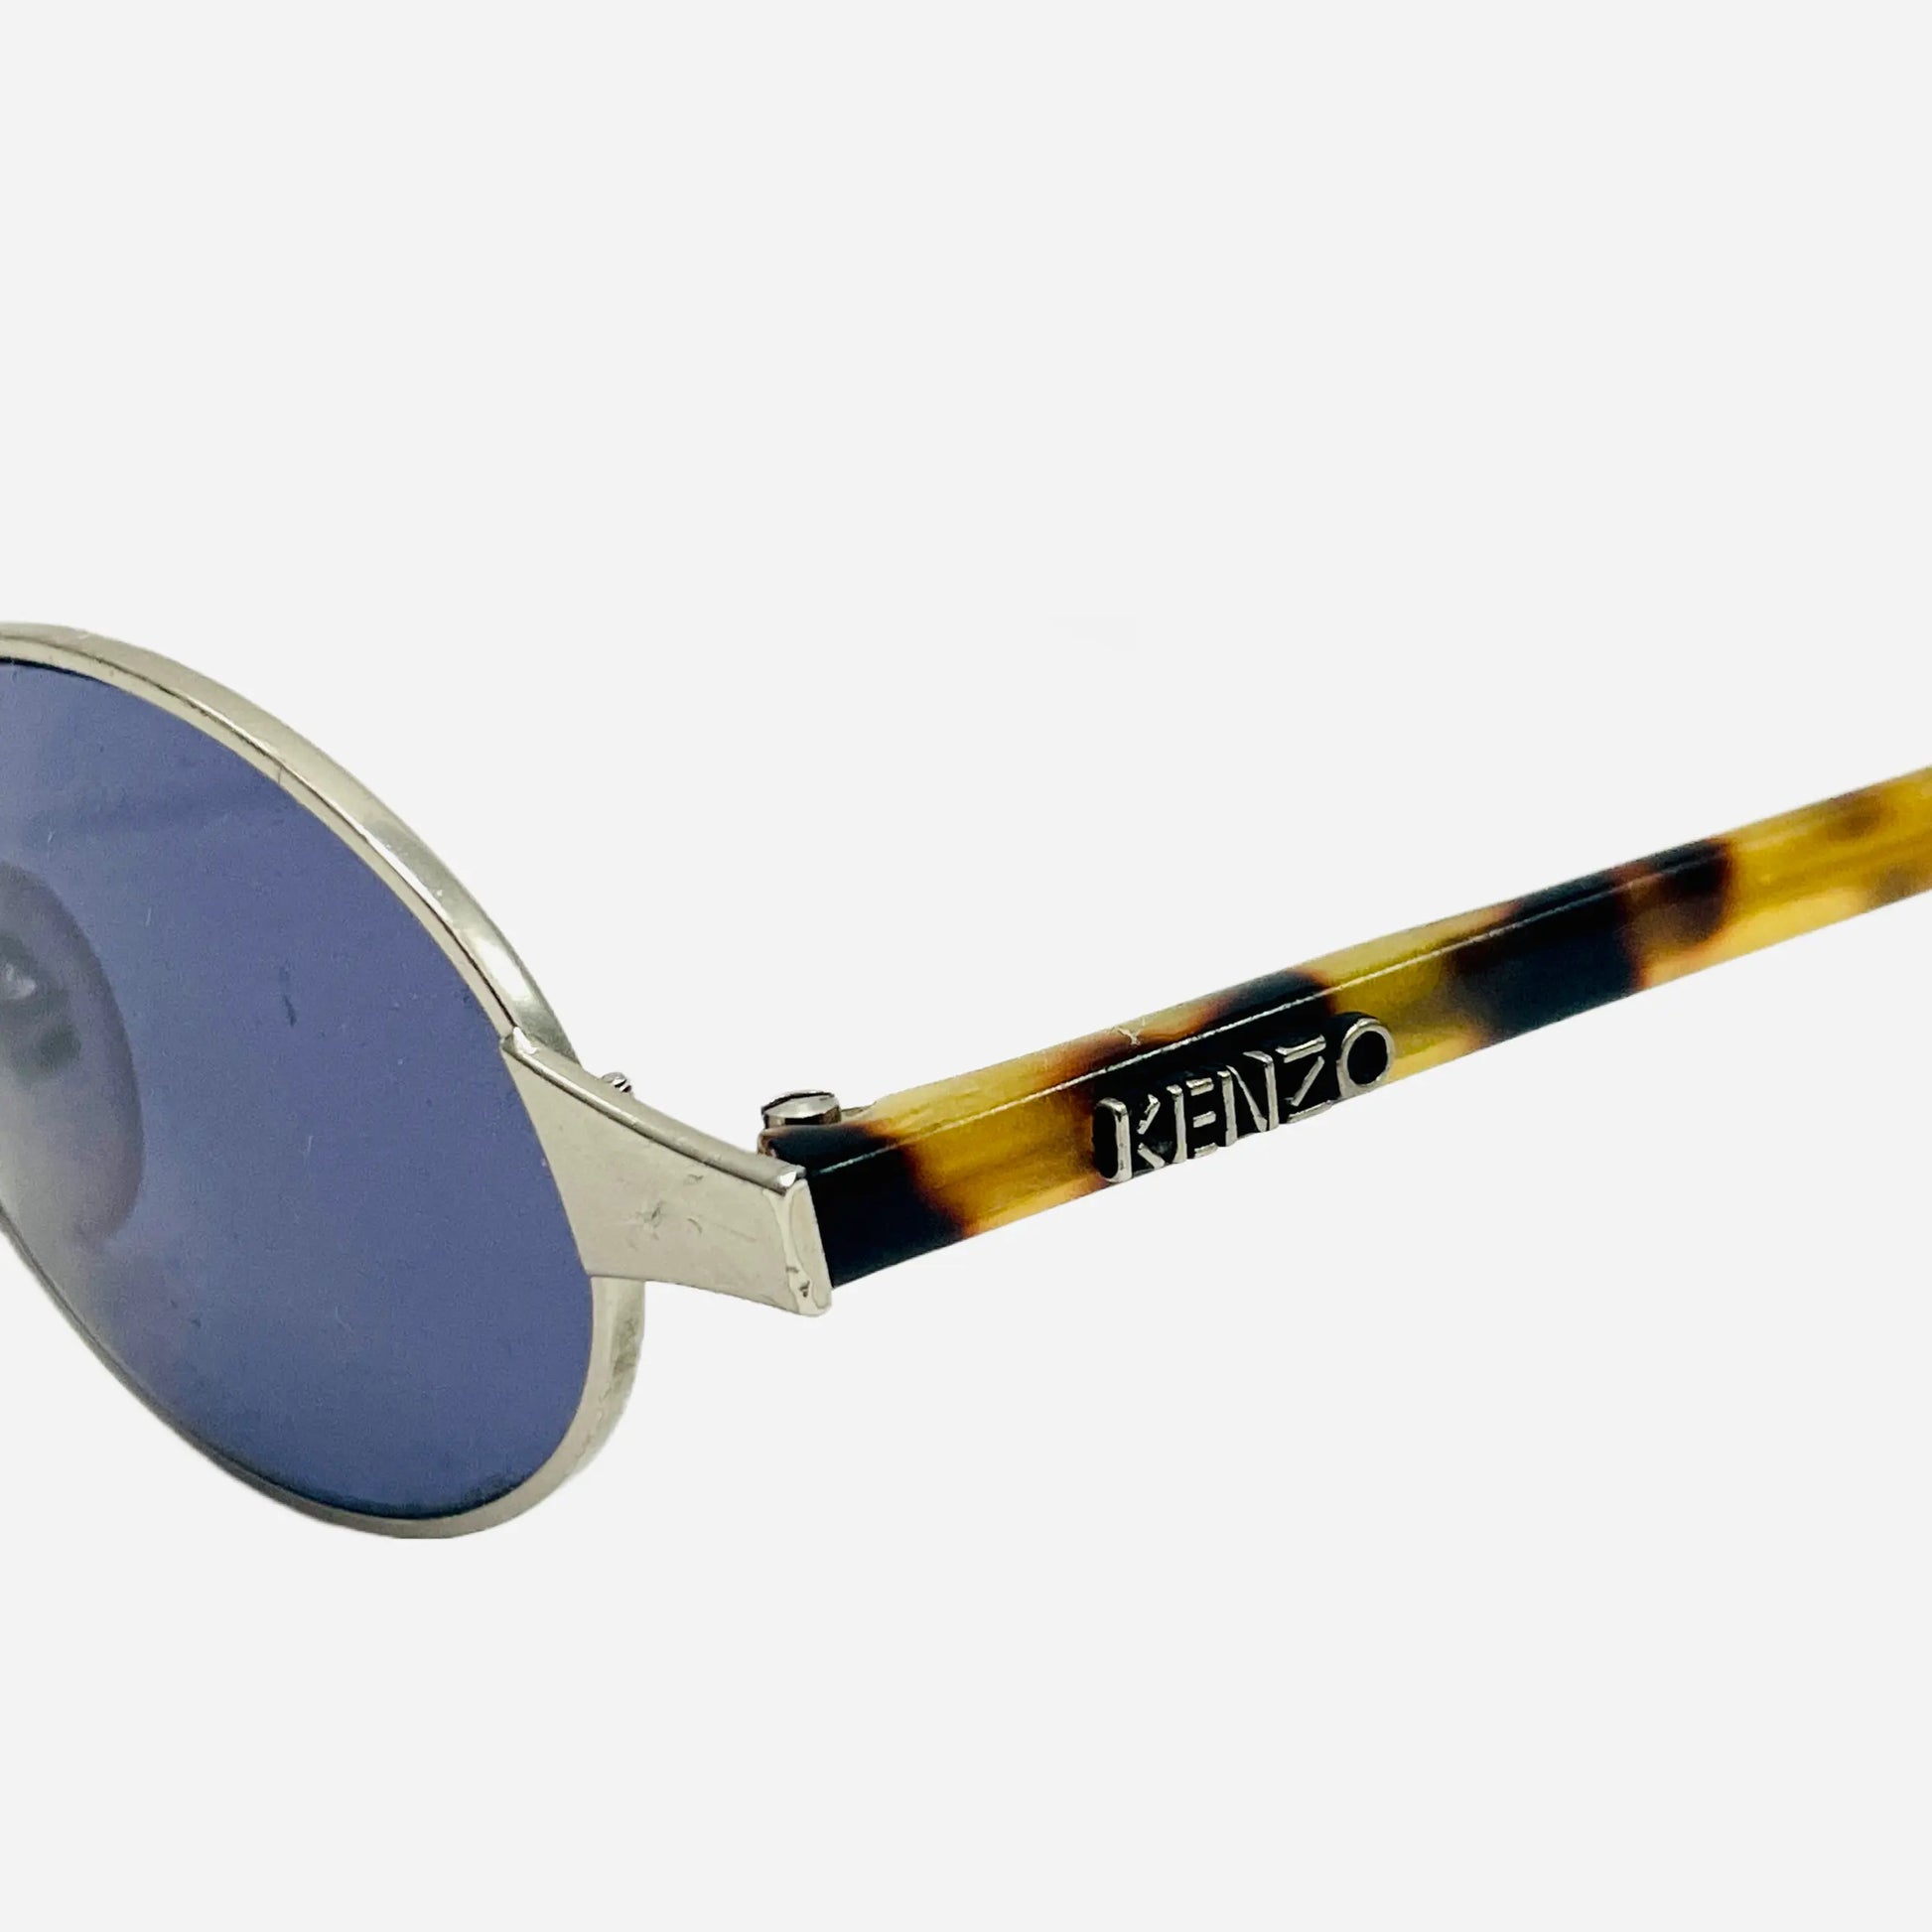 Vintage-Kenzo-Sonnebrille-Sunglasses-Kinley-made-in-Japan-side-detail